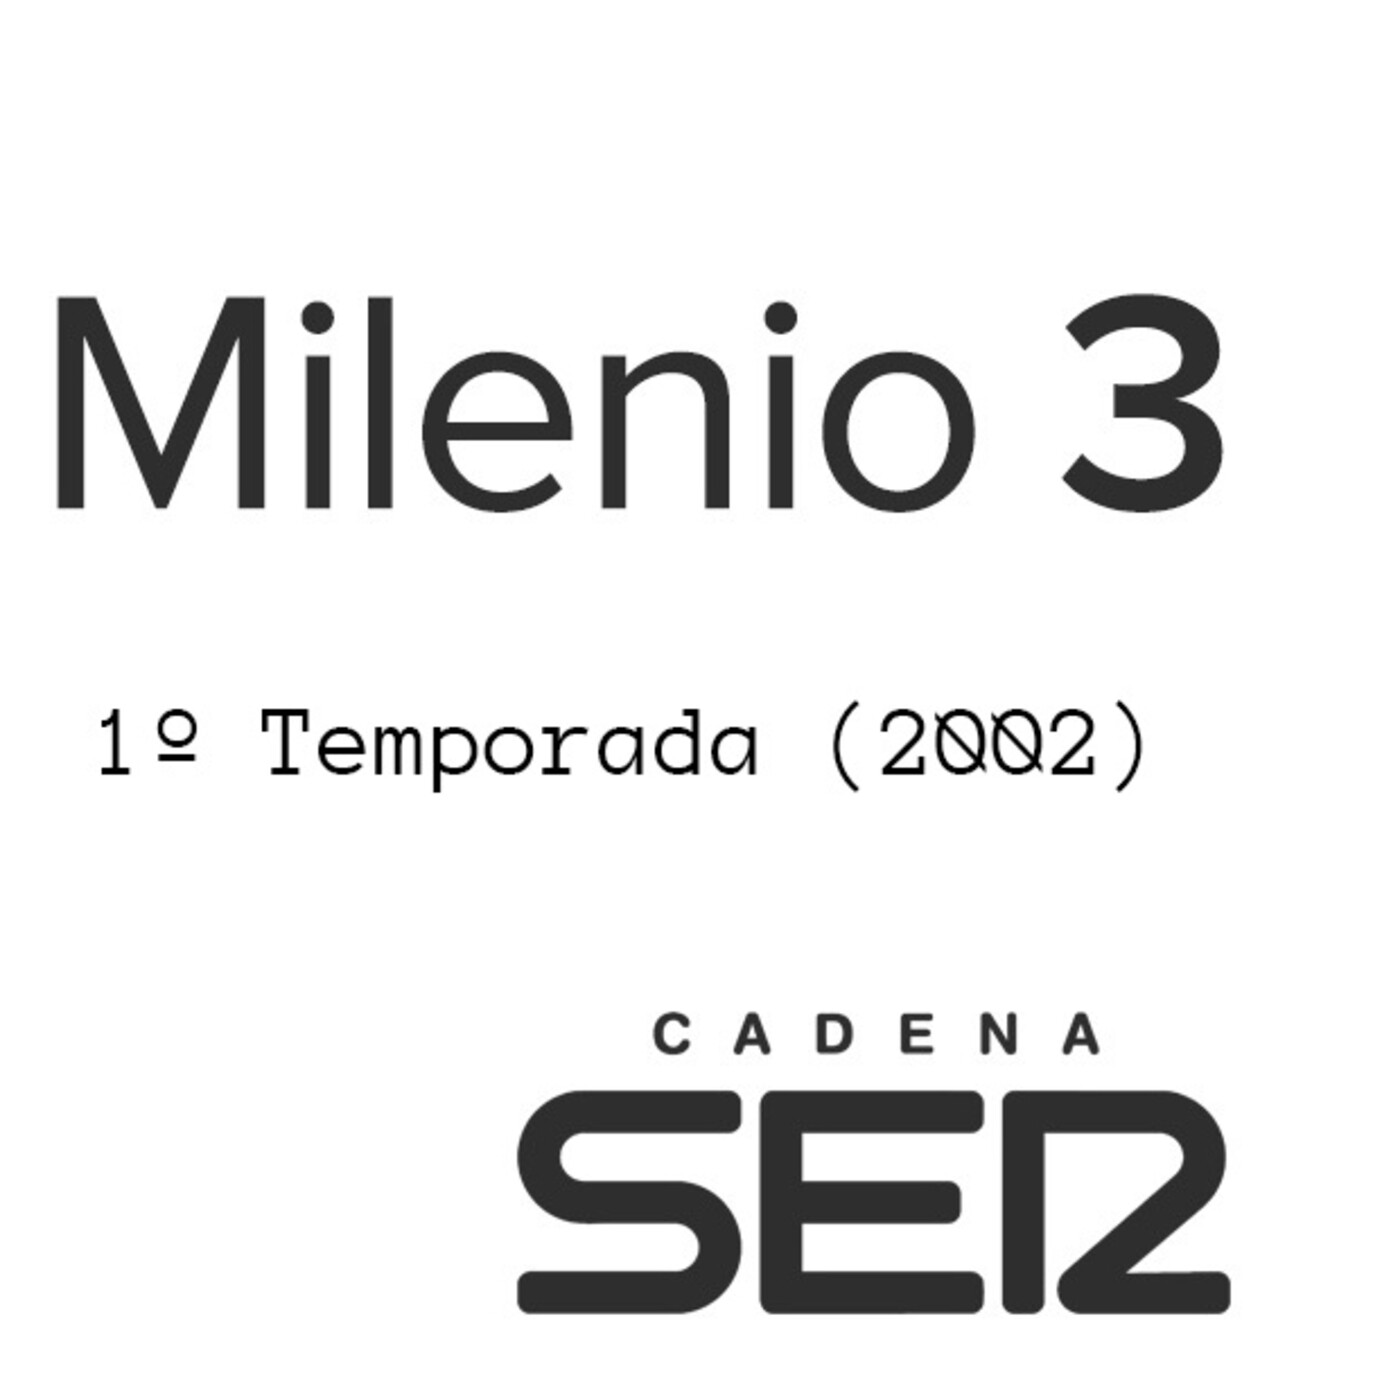 Milenio 3 Temporada 1 